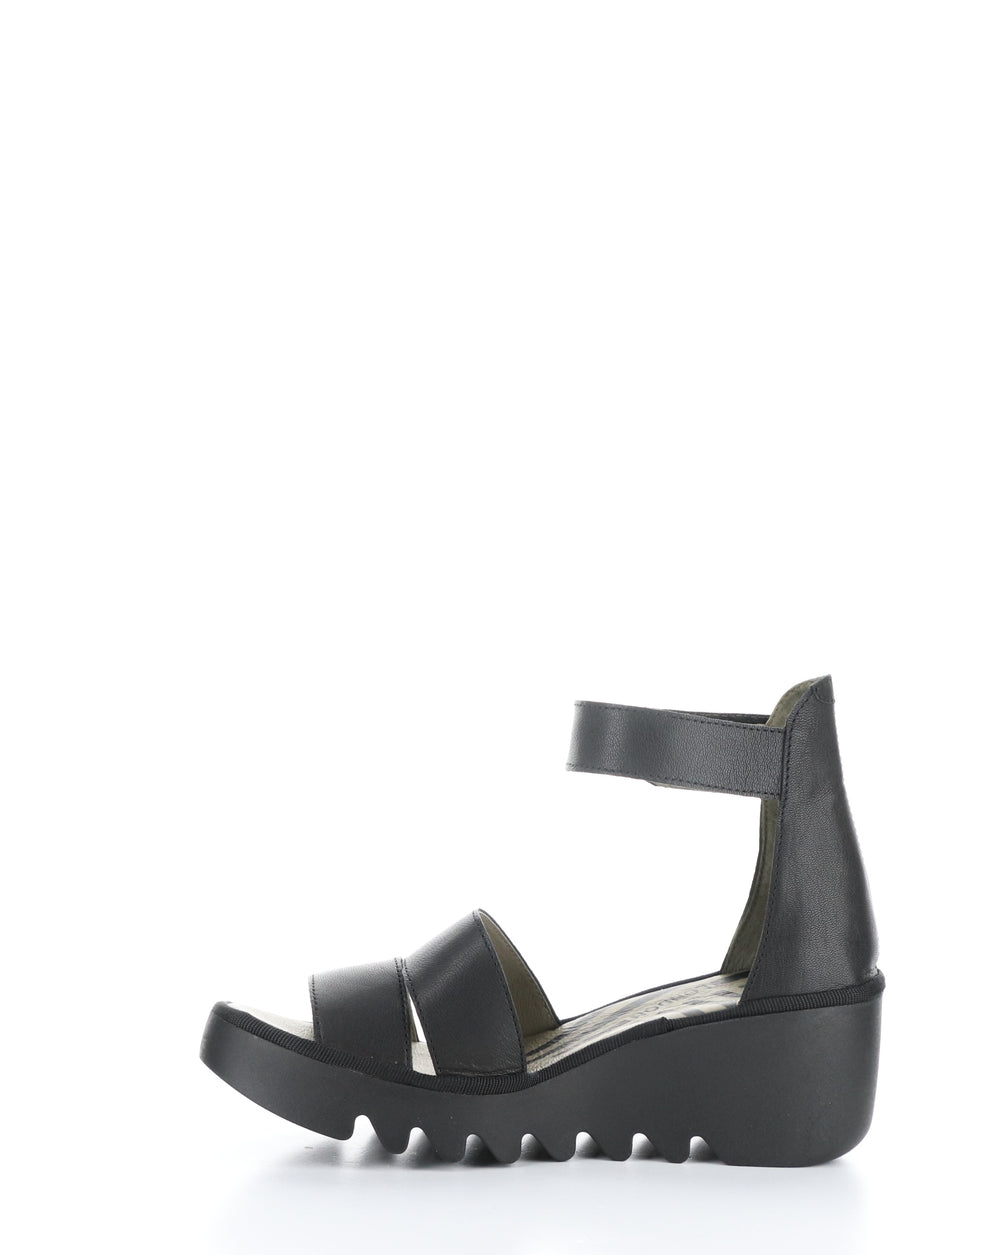 BONO290FLY 007 BLACK Velcro Sandals